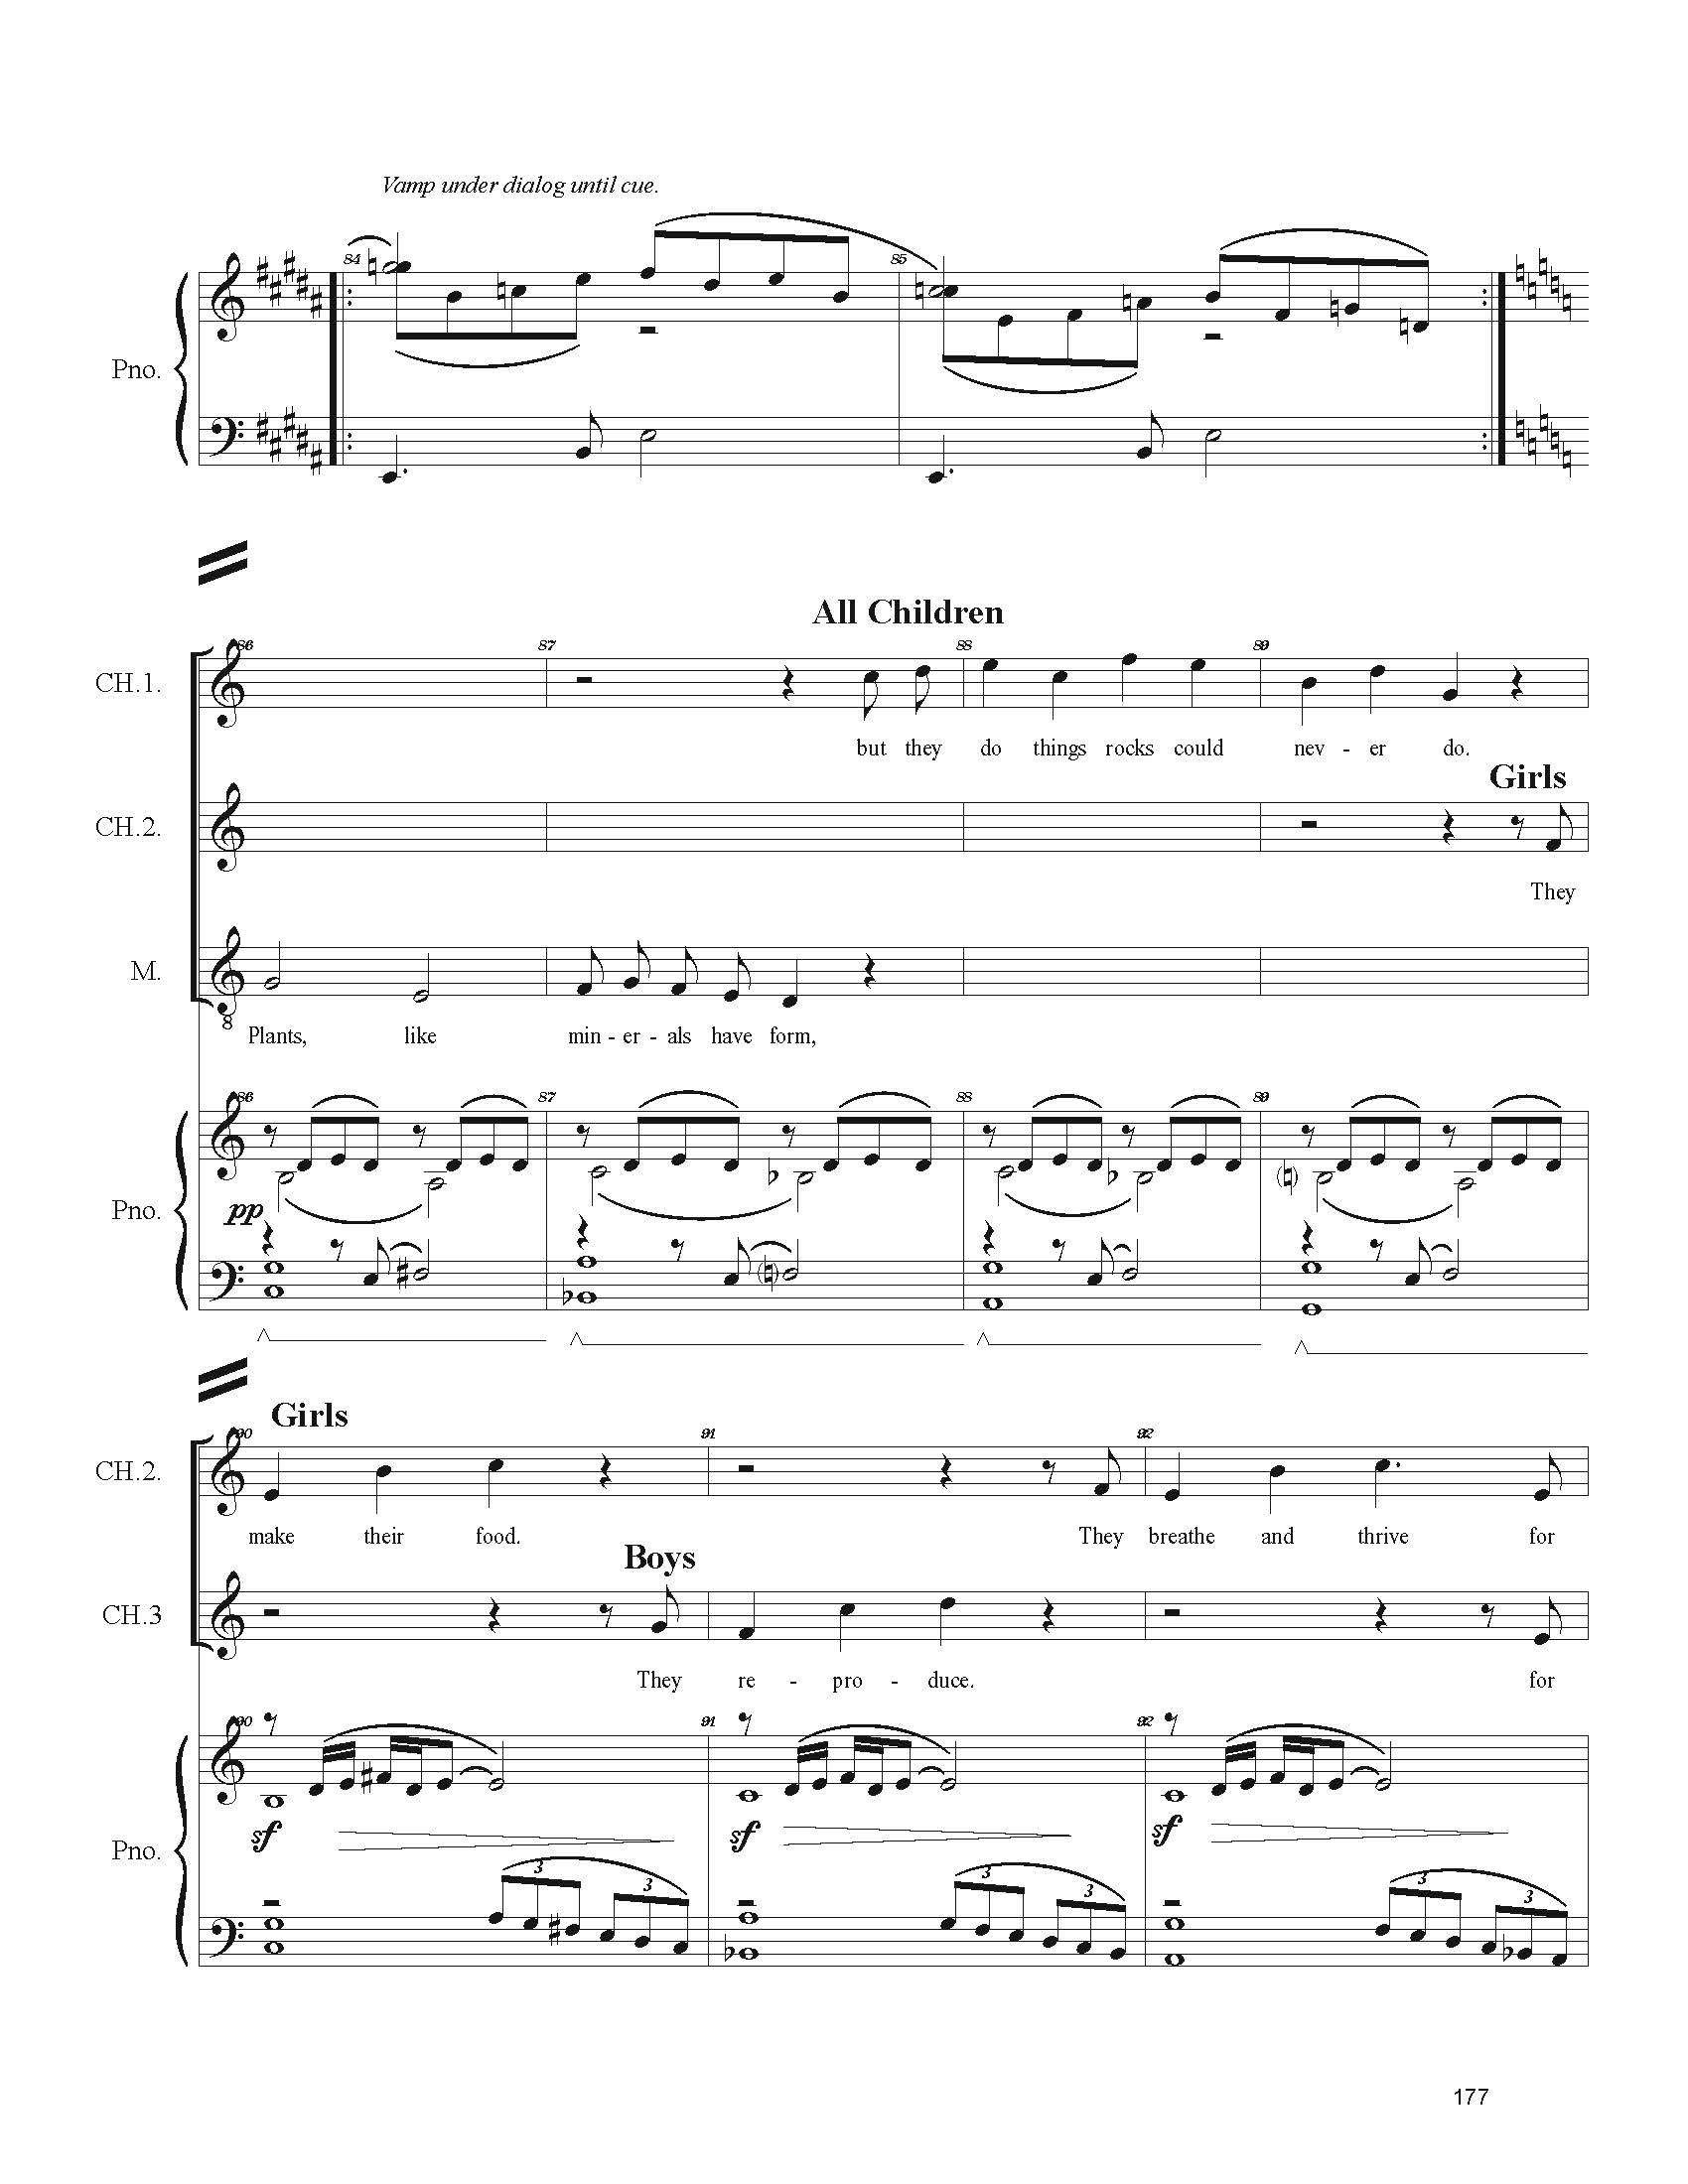 FULL PIANO VOCAL SCORE DRAFT 1 - Score_Page_177.jpg